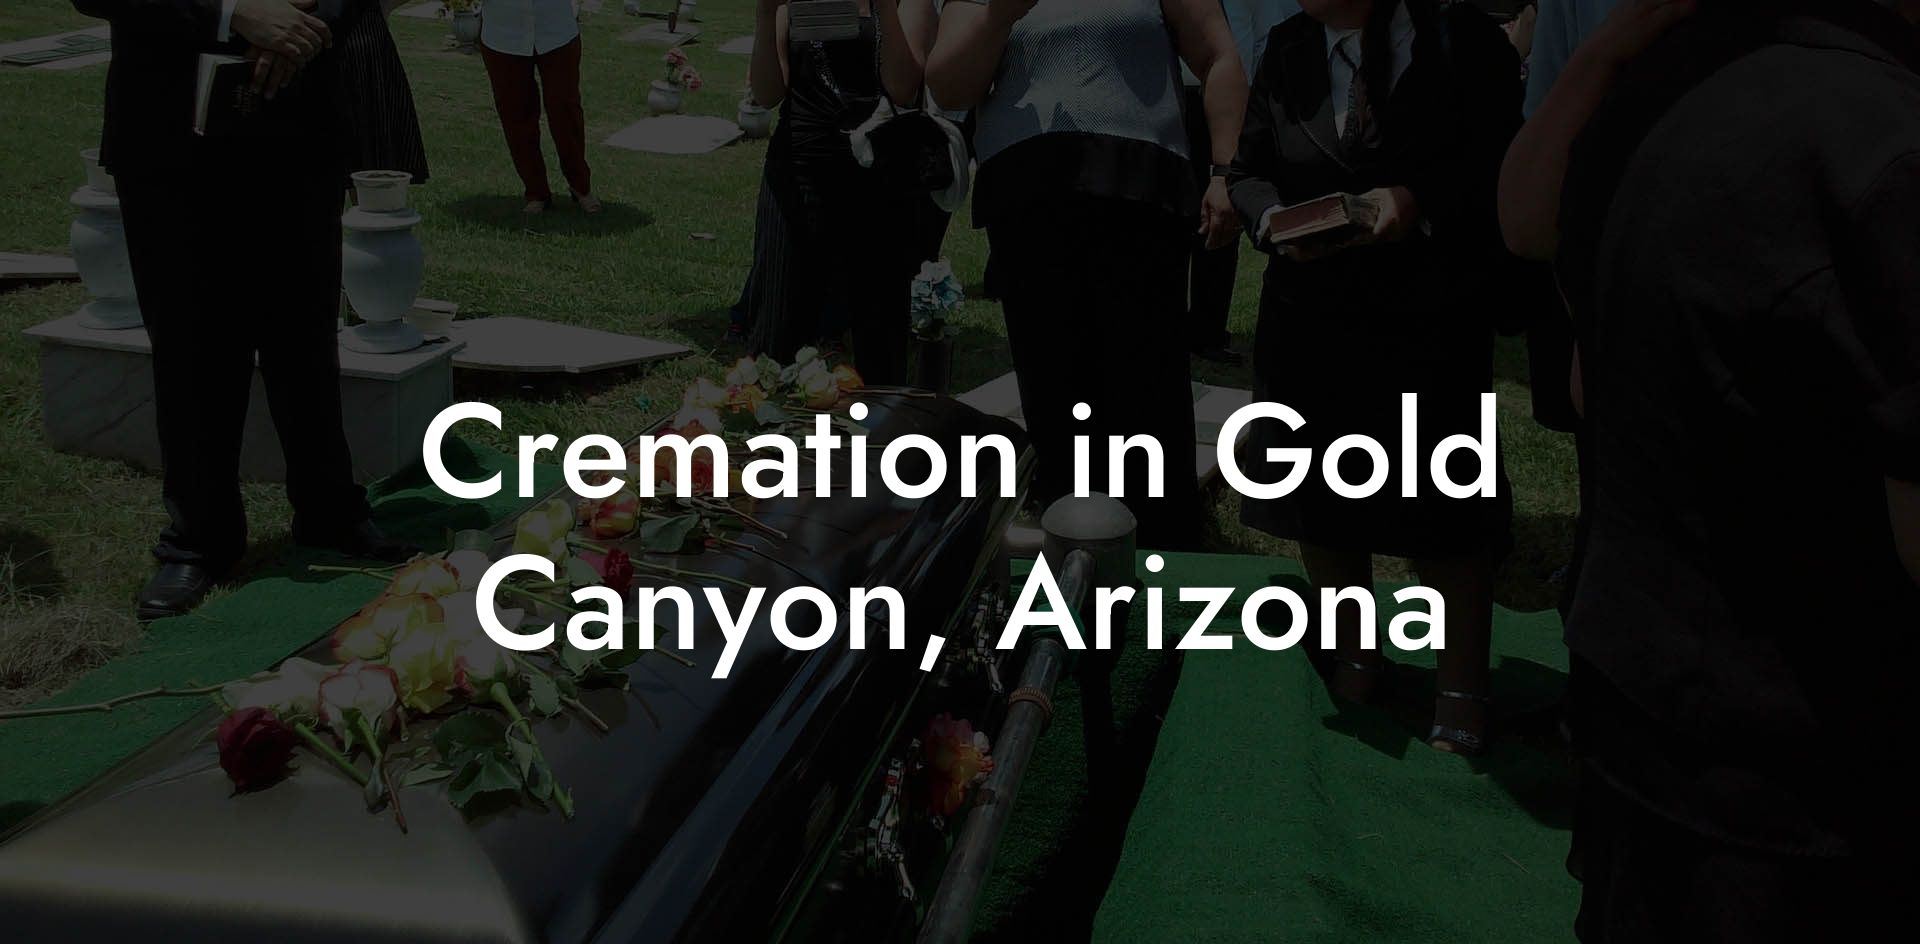 Cremation in Gold Canyon, Arizona